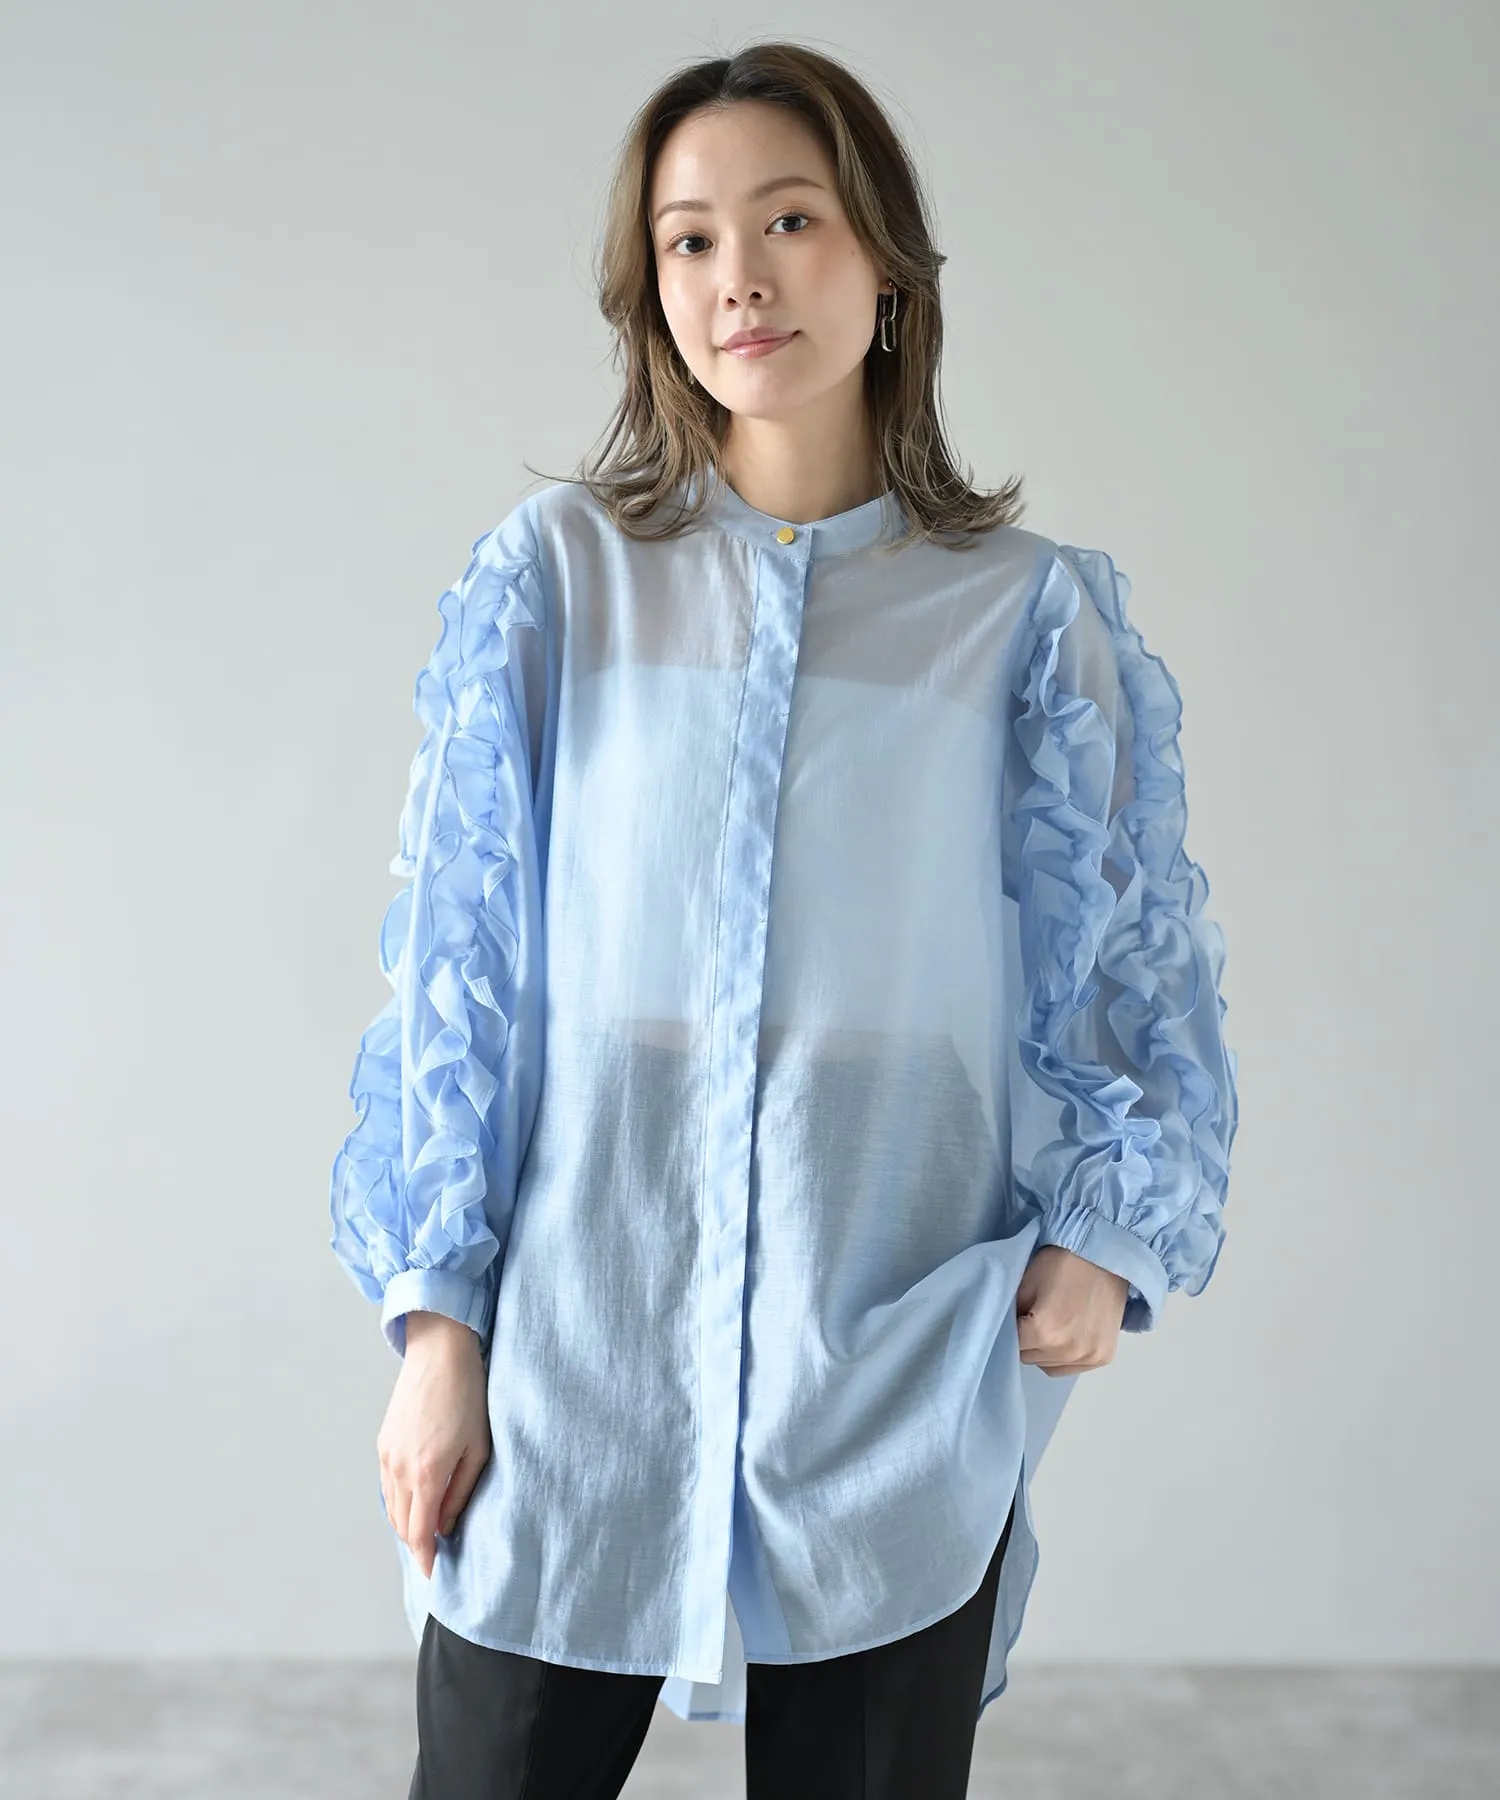 HERENCIA / Ruffled balloon sleeve sheer blouse